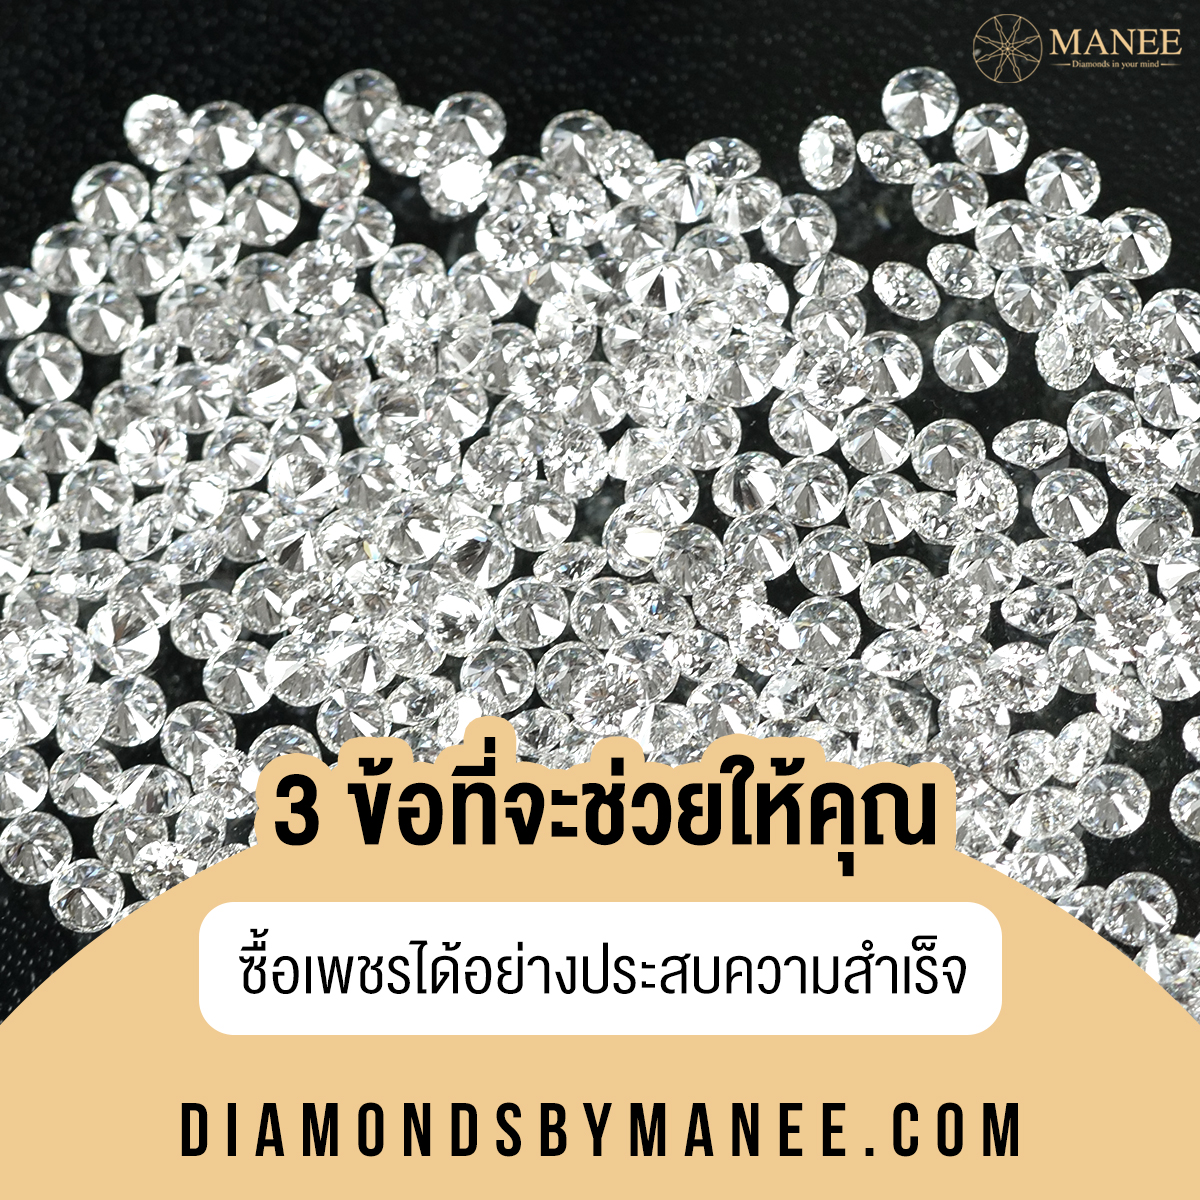 Expert Tips for Buying Diamonds | Diamonds by Manee | GIA Diamond Certificate